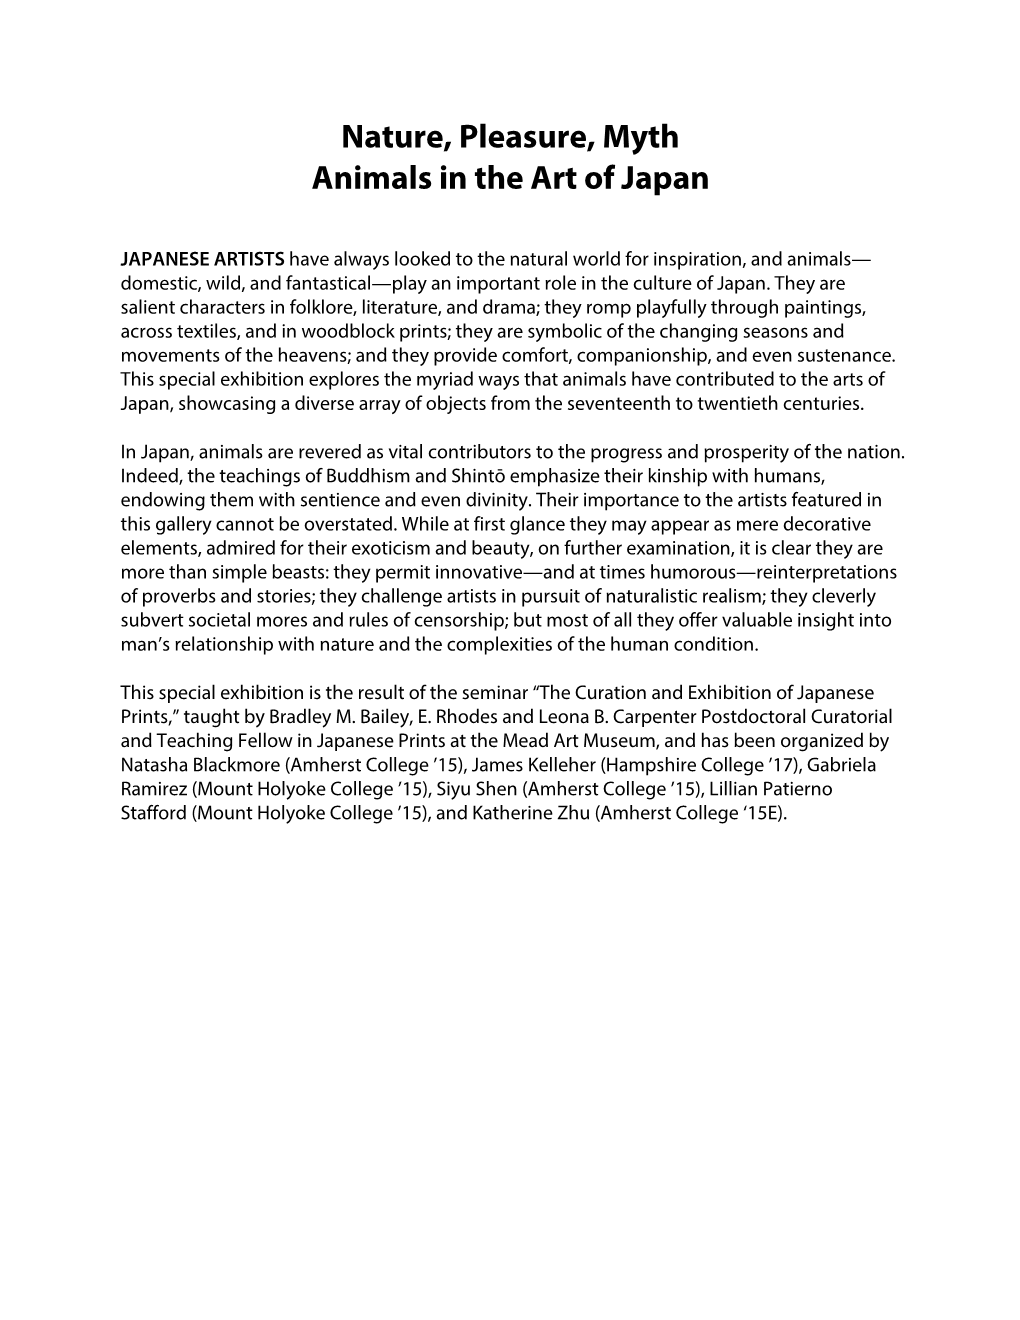 Nature, Pleasure, Myth Animals in the Art of Japan